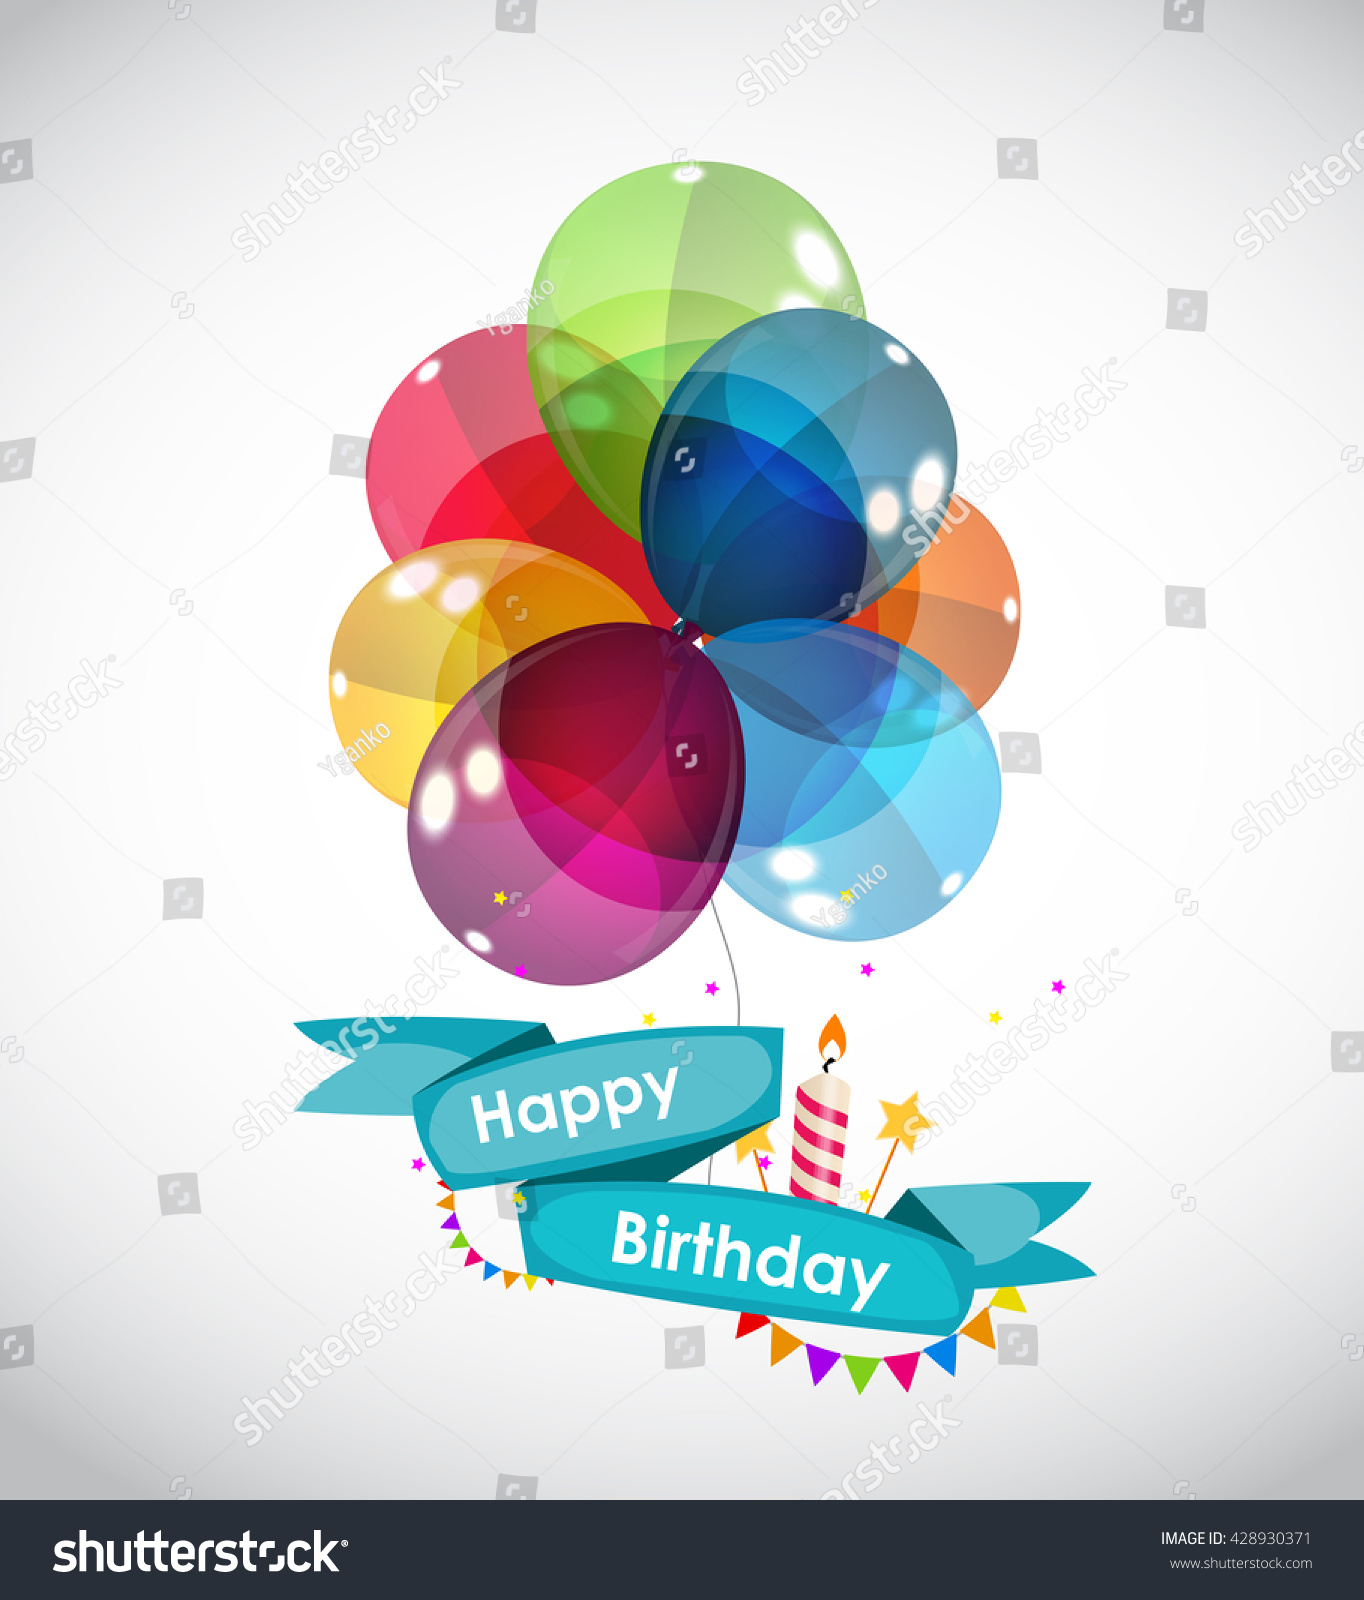 Download Happy Birthday Card Template Balloons Vector Stock Vector ...